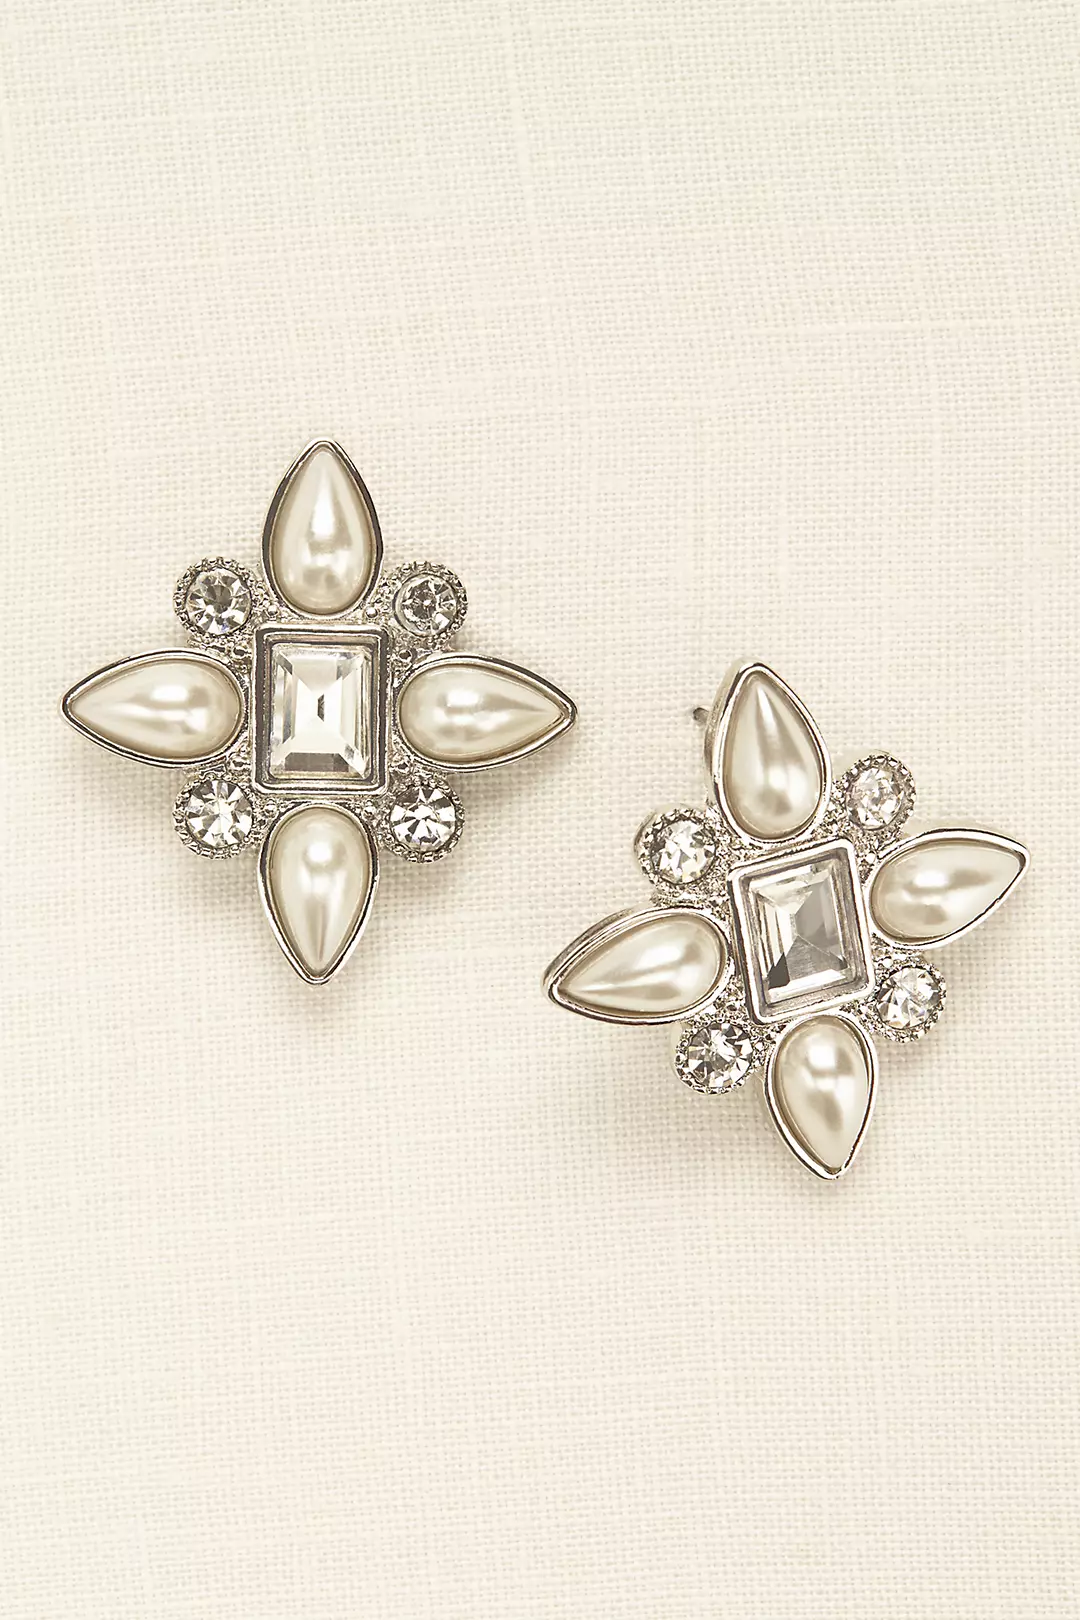 Emerald Cut Cluster Pearl Earrings Image